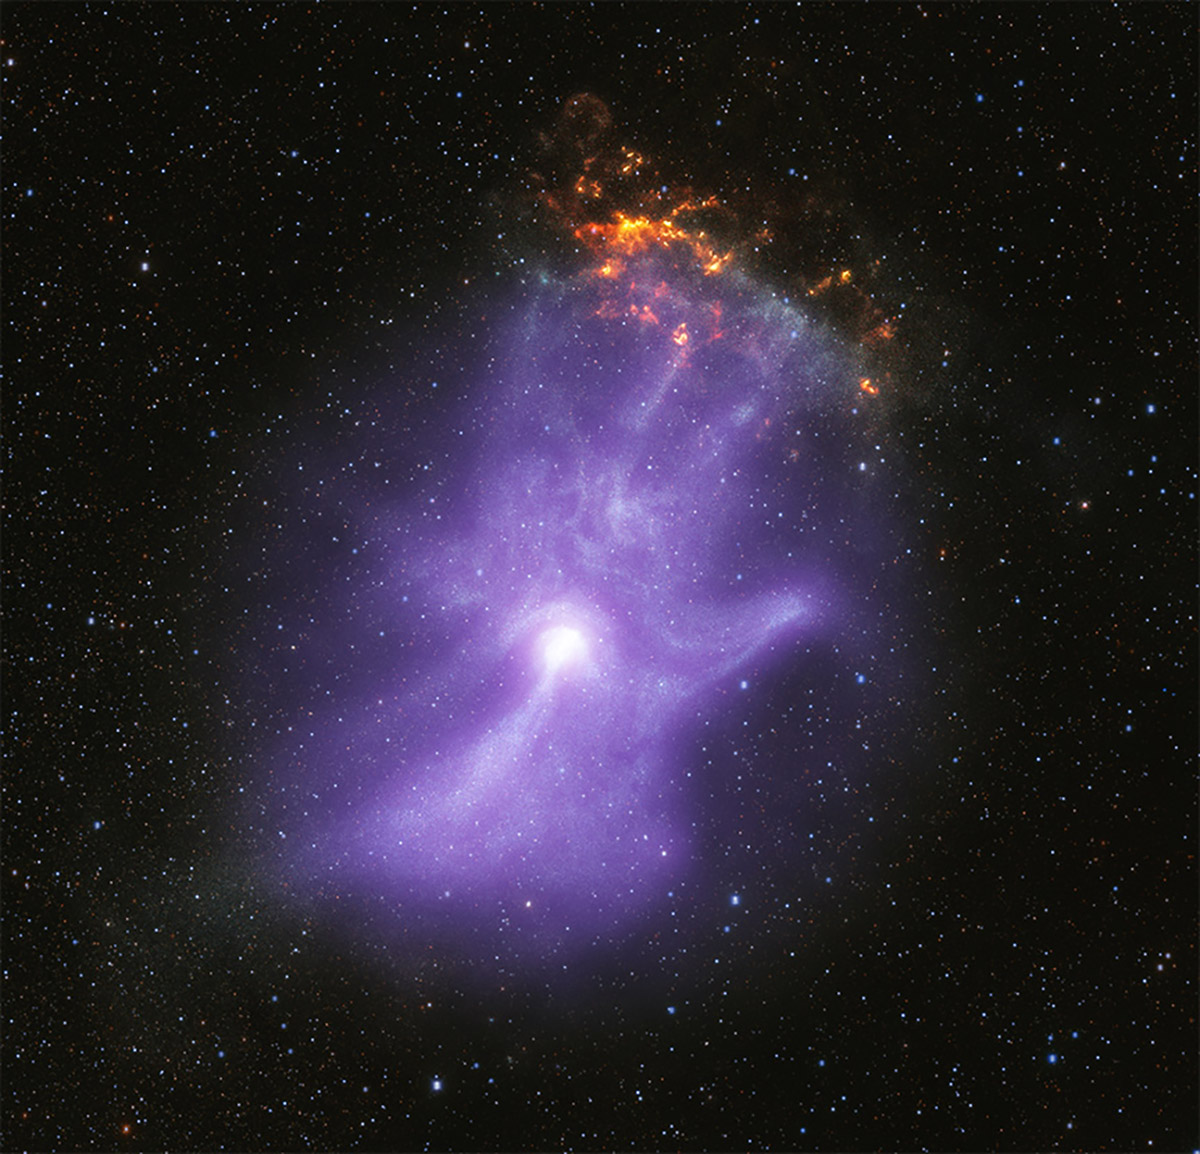 NASA captures image of eerie ‘ghost hand’ in space